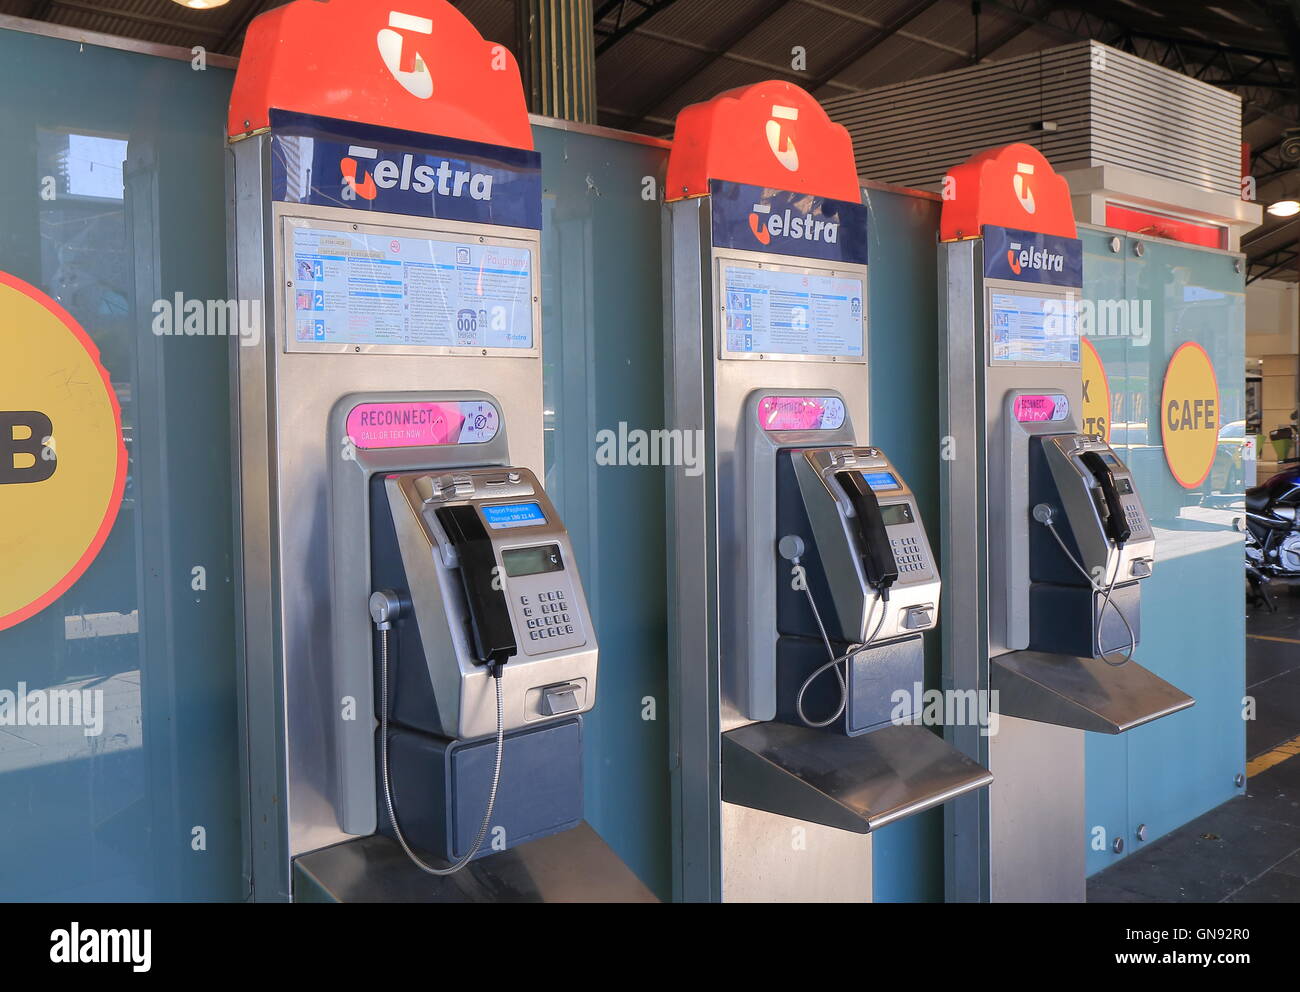 Telstra public phone in Melbourne Australia. Stock Photo